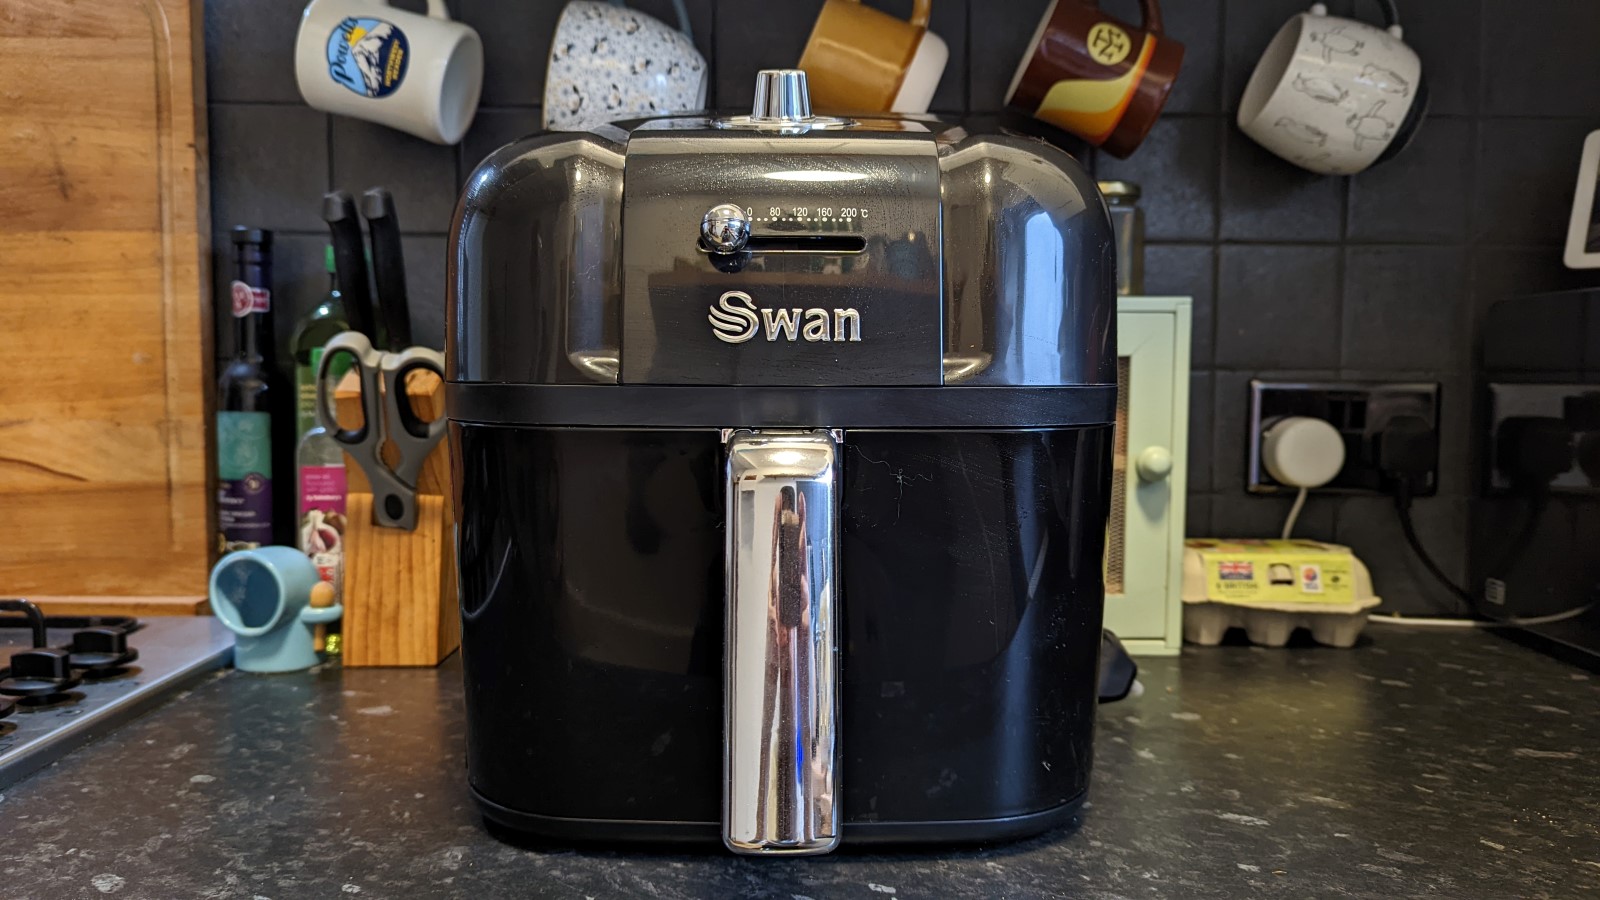   Swan Retro Air Fryer - De beste budget air fryer